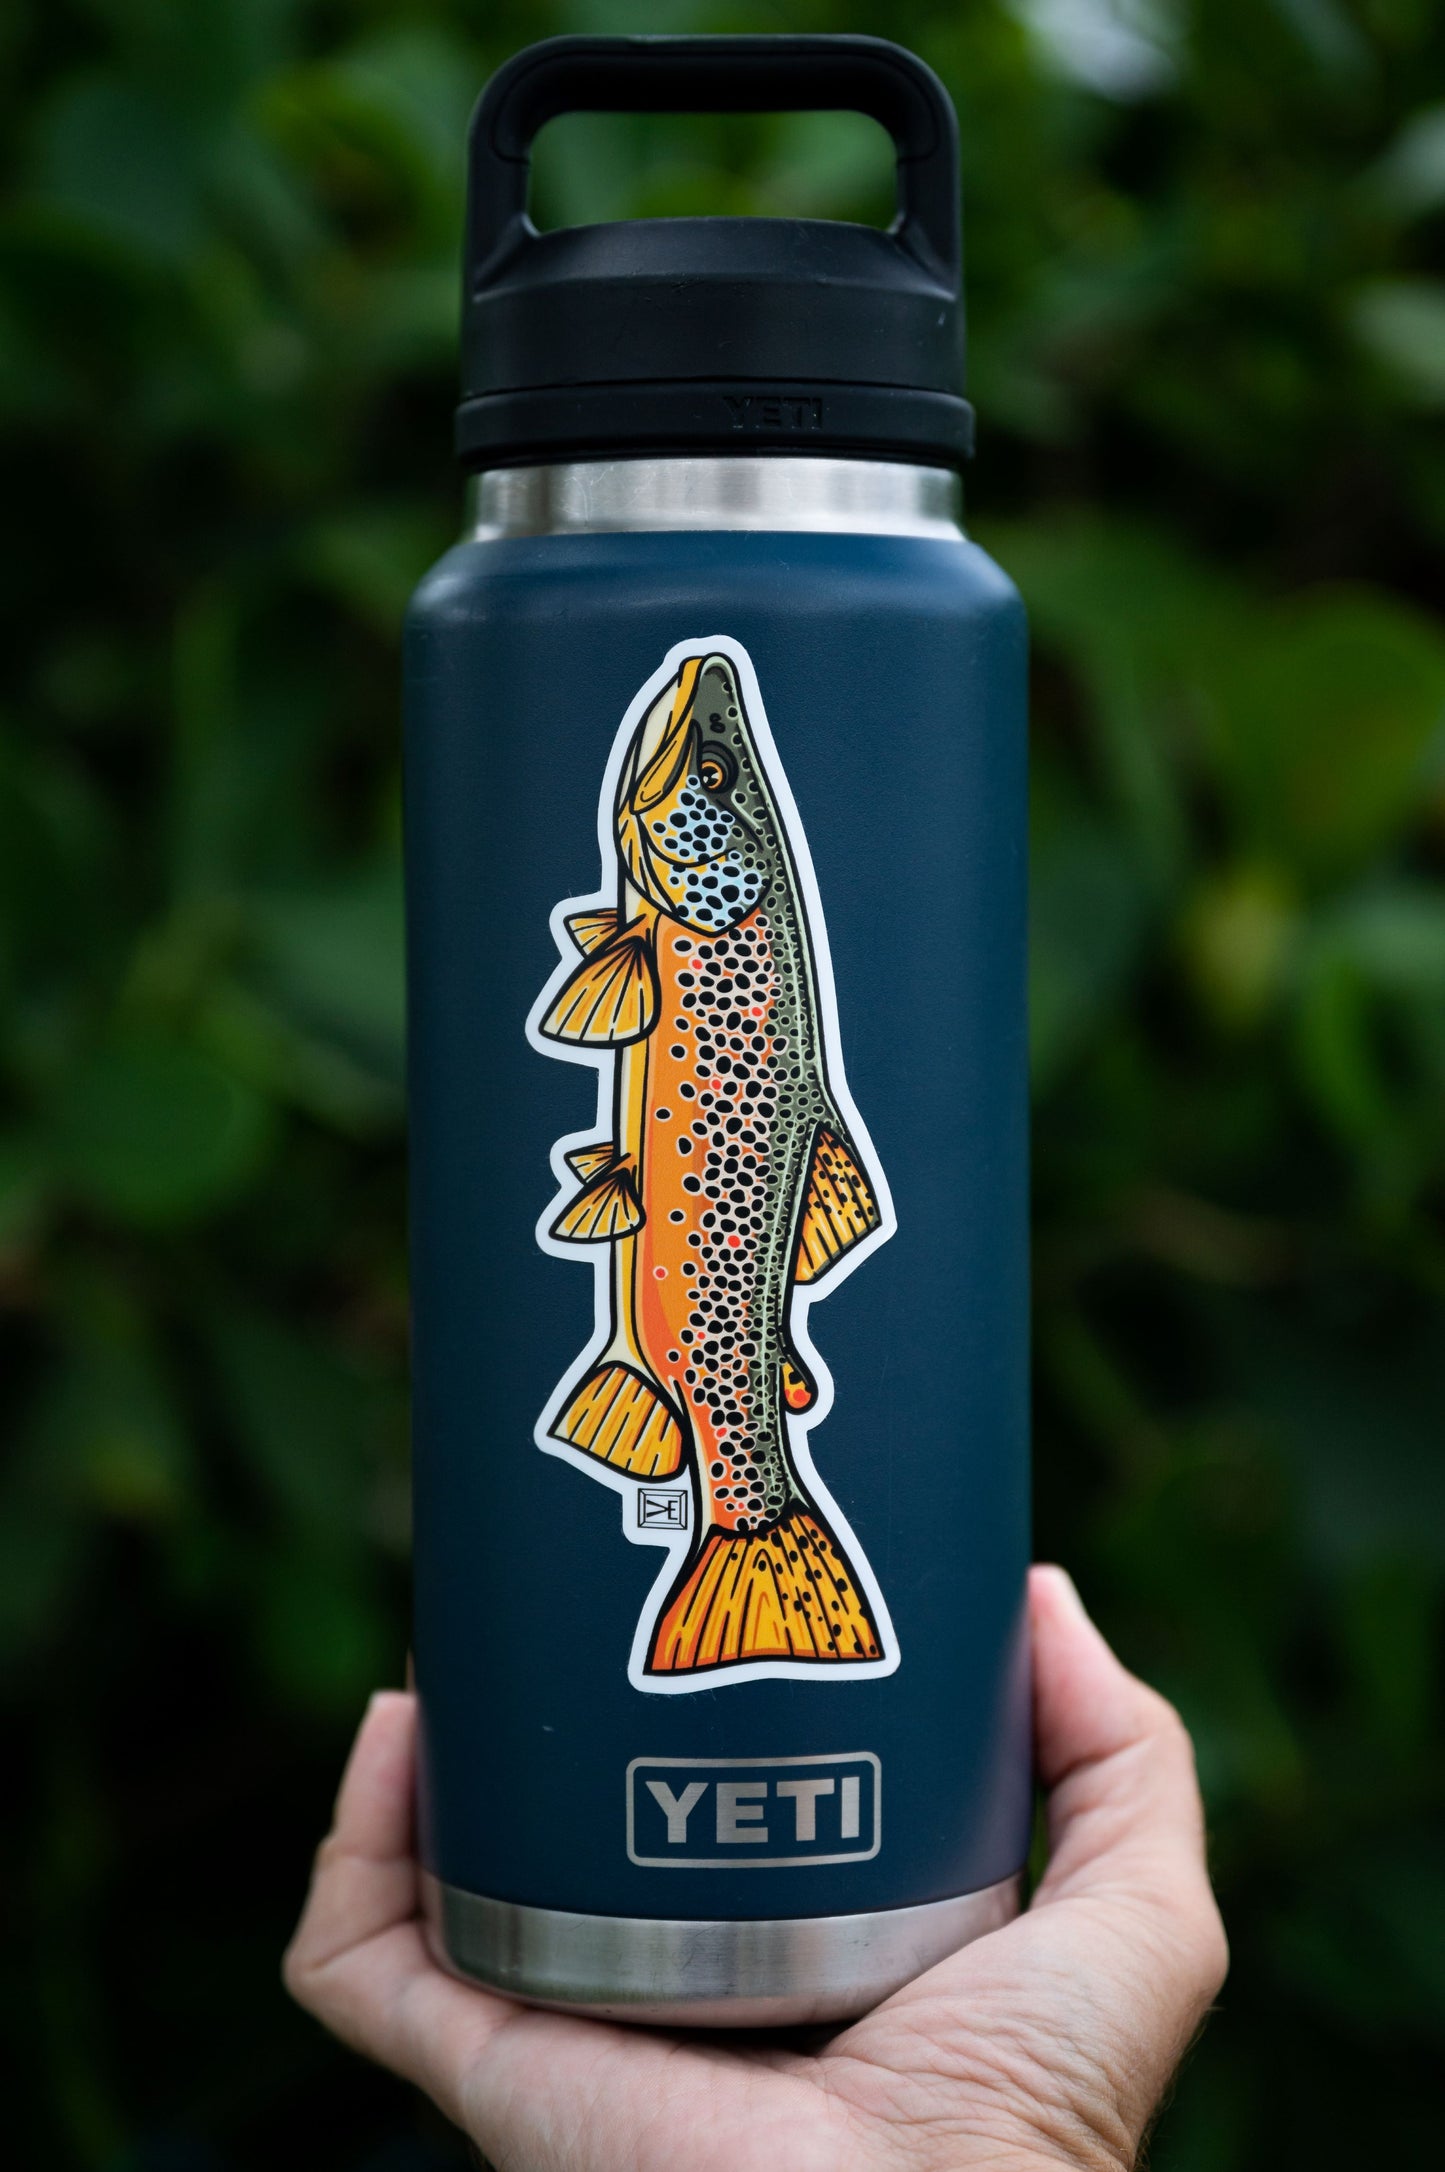 Brown trout sticker on Yeti tumbler